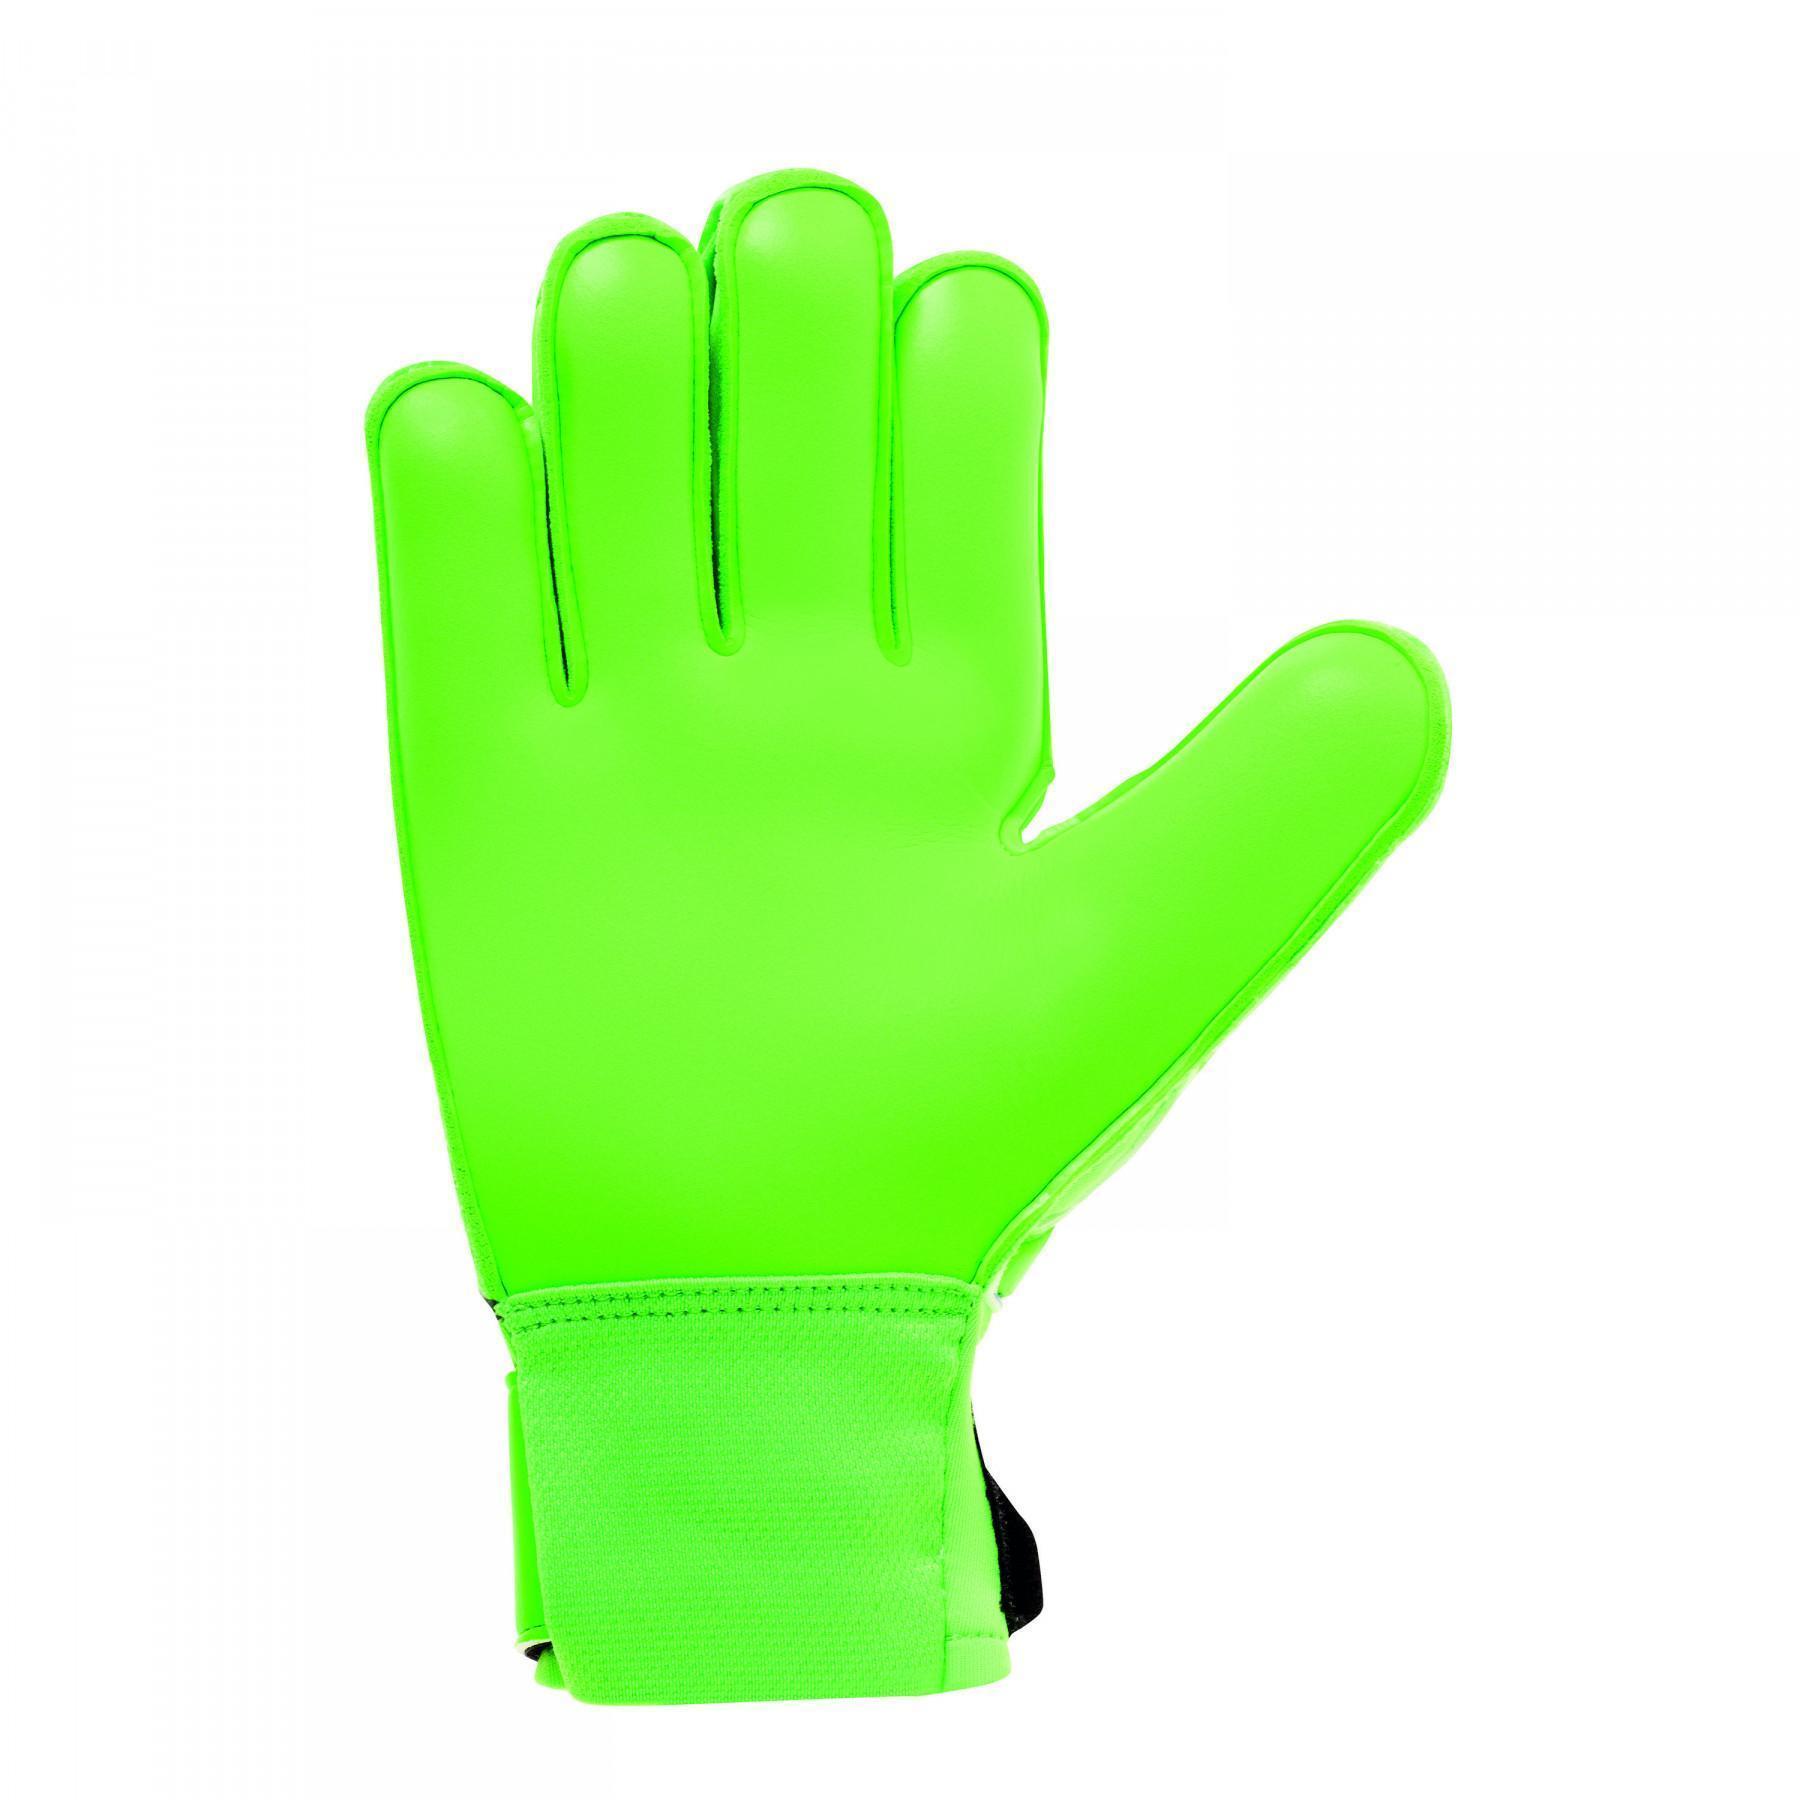 Goalkeeper gloves Uhlsport Soft Pro Tensiongreen